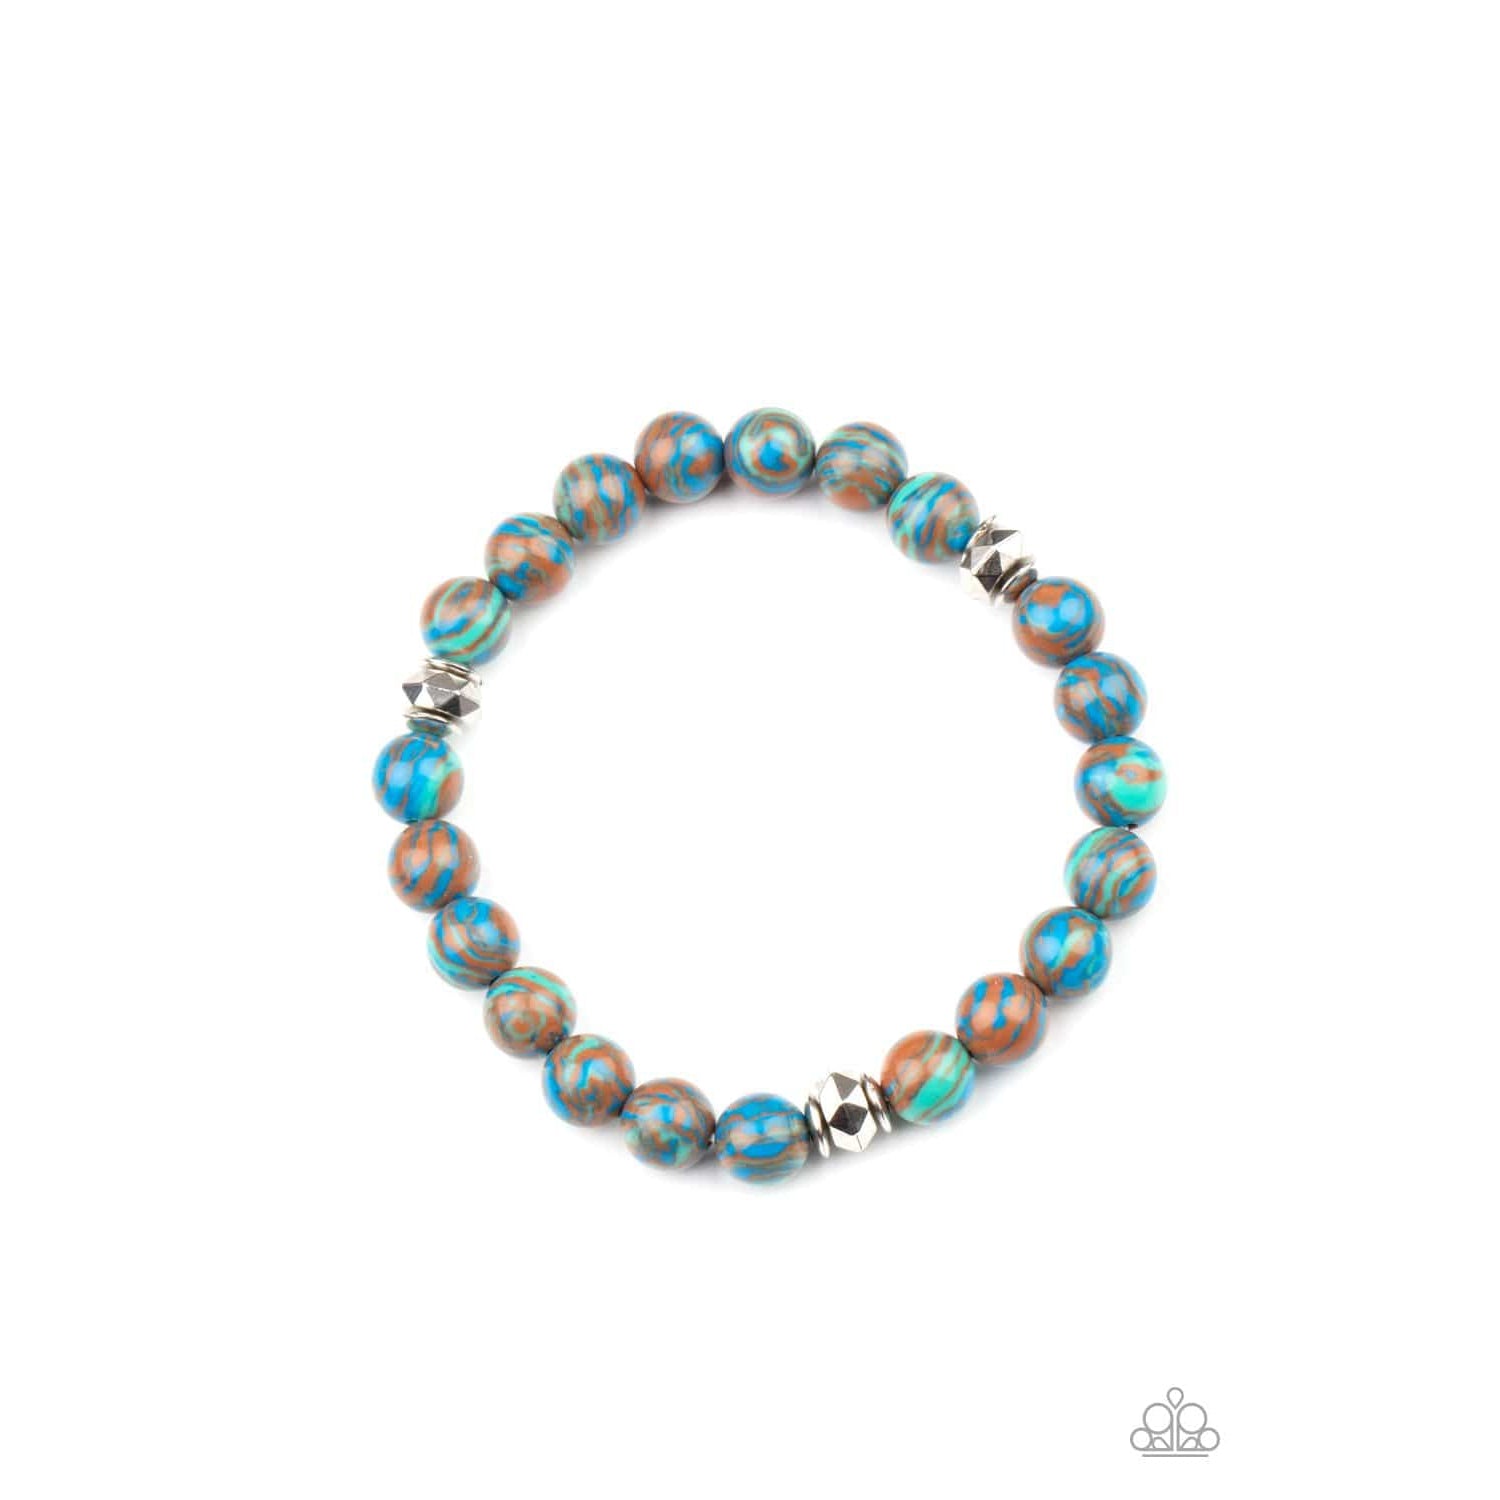 Awakened - Blue, Green & Brown Beads Bracelet - Paparazzi Accessories - GlaMarous Titi Jewels